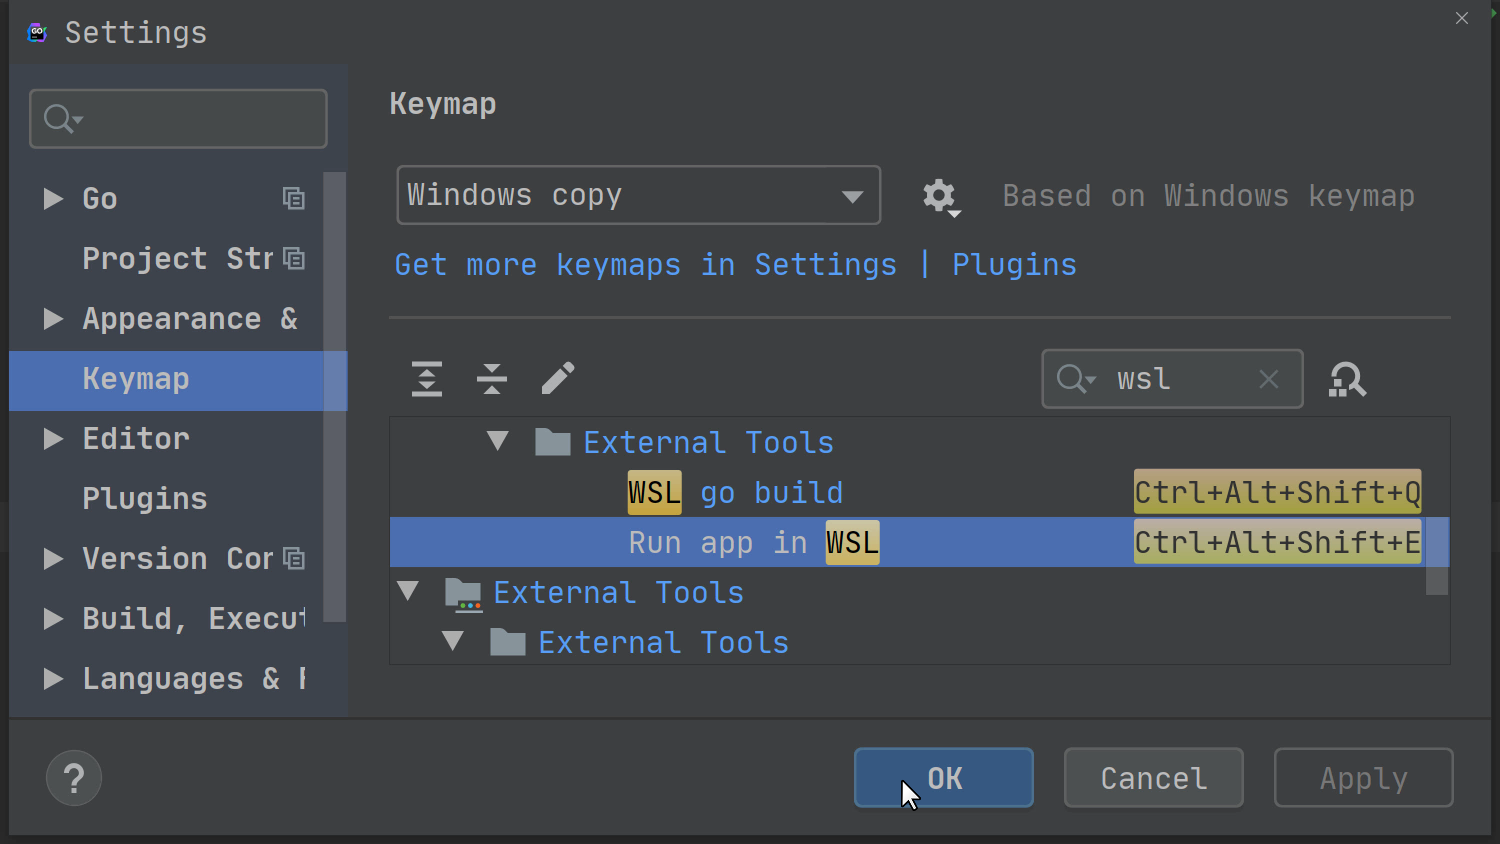 assign shortcuts to wsl tools